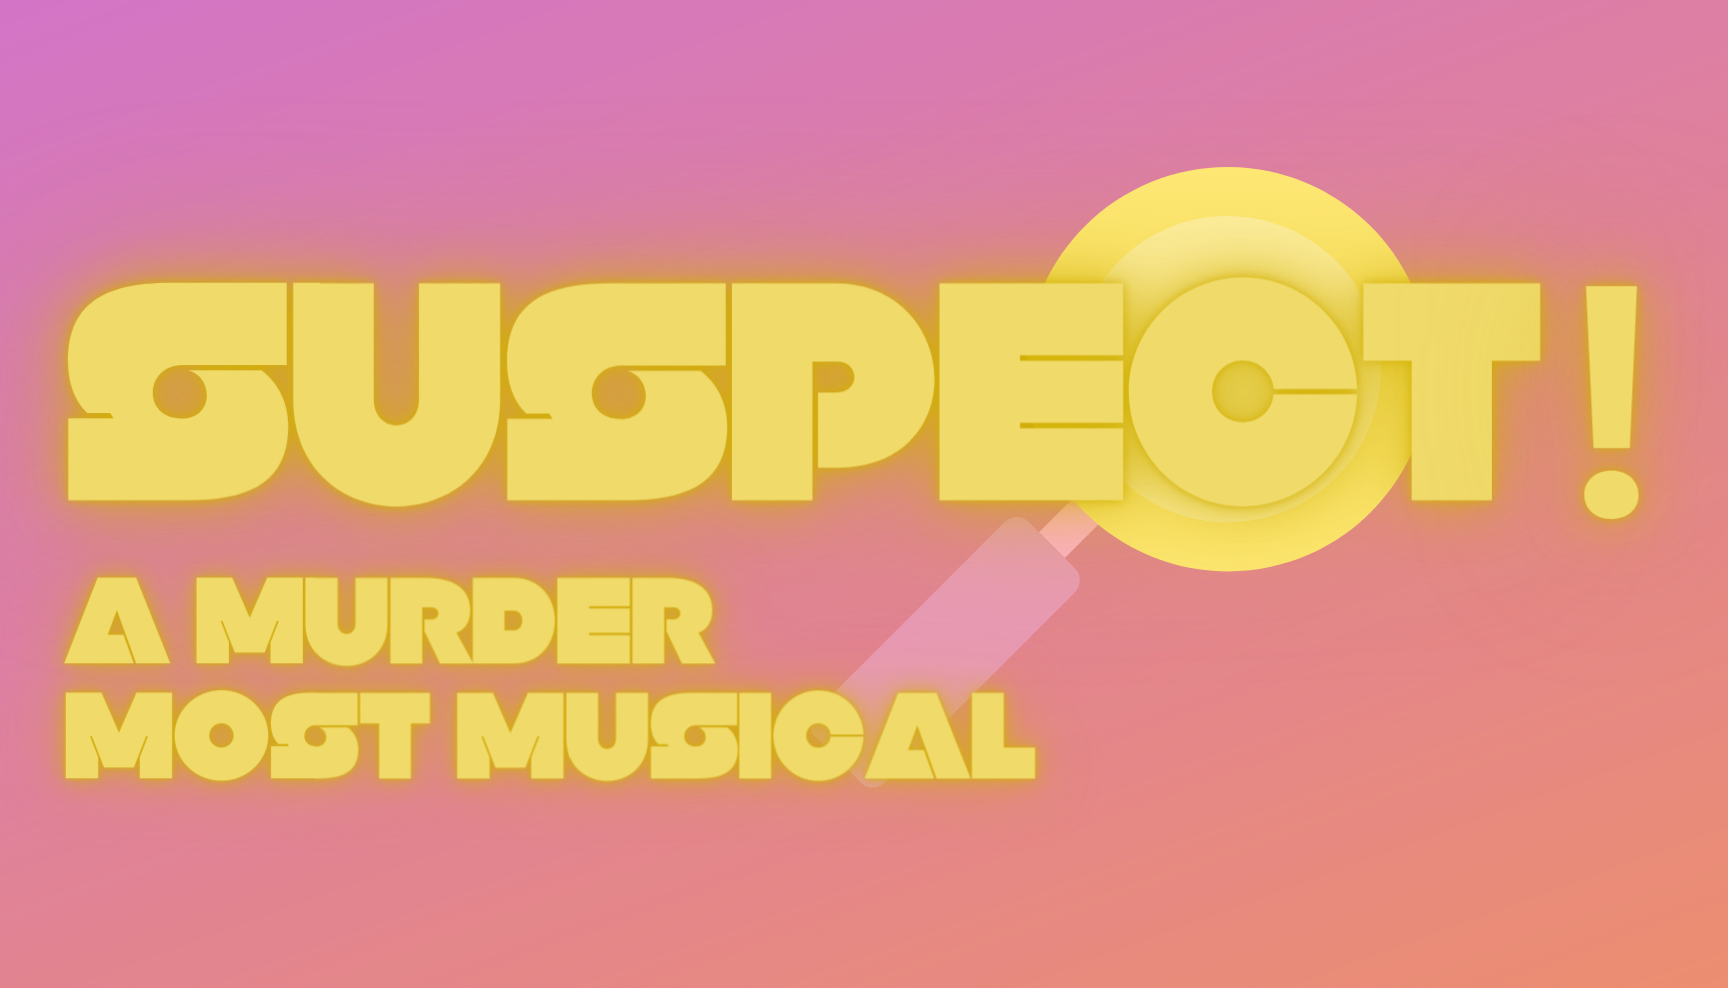 Suspect! A Murder Most Musical